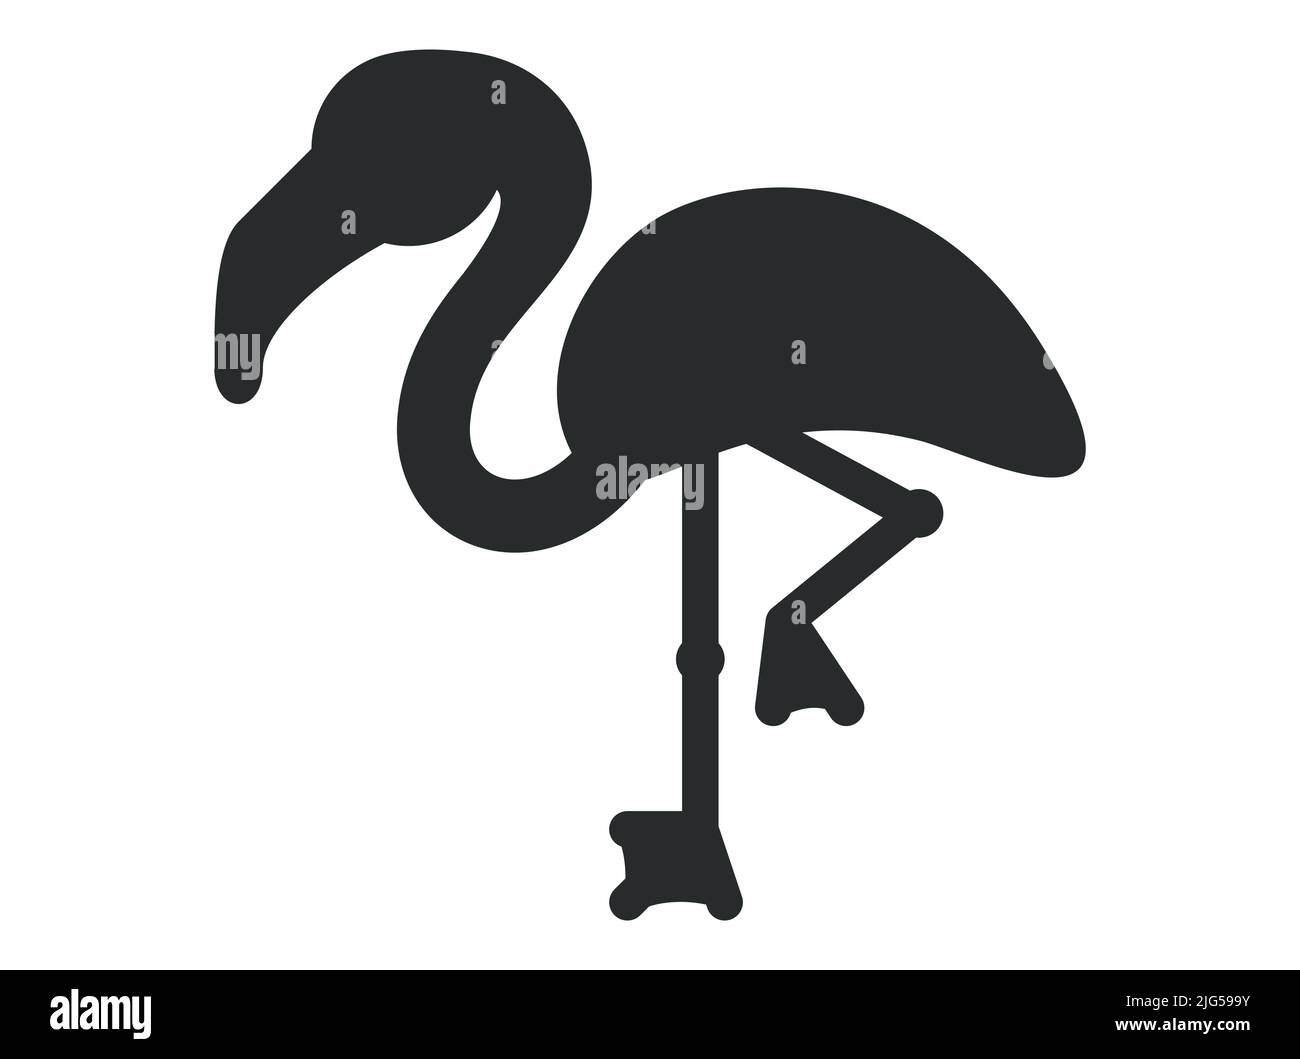 Premium Photo | A silhouette black and white picture of a flamingo